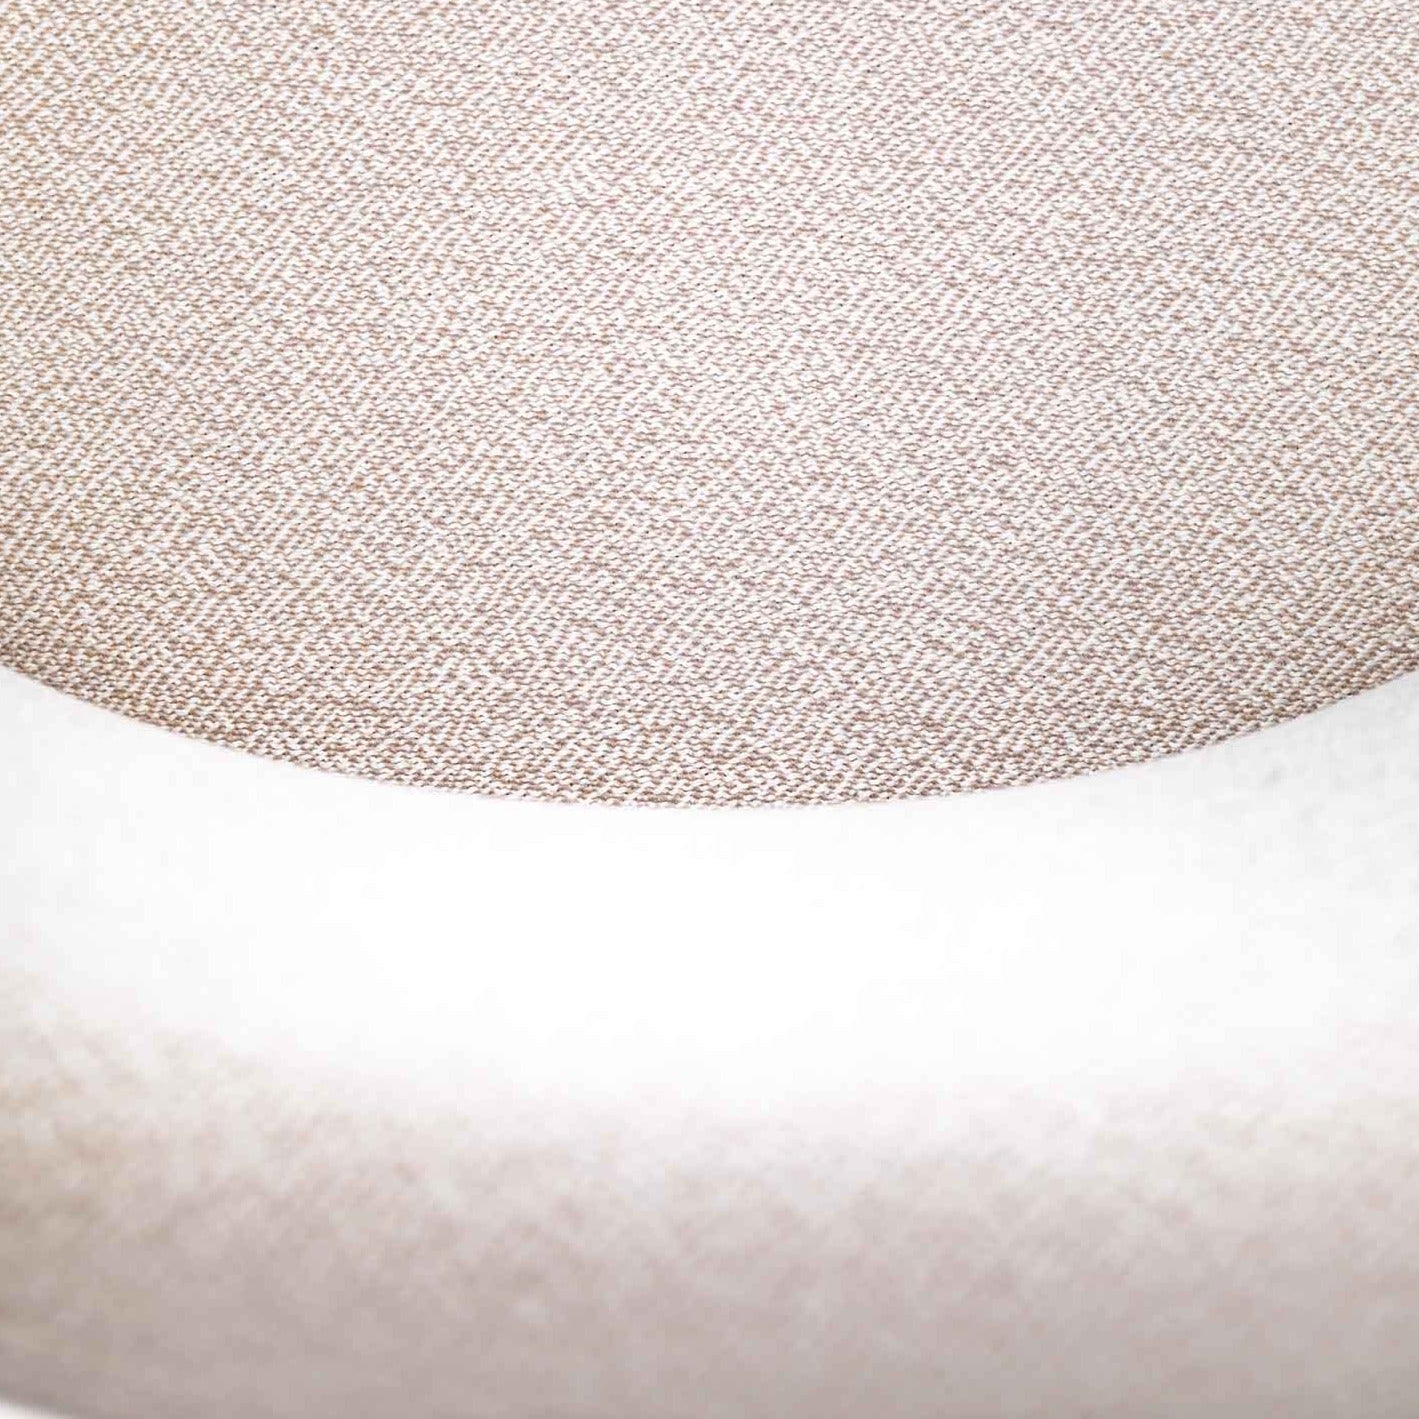 NASU Side Chair Natural-Cream front macro view